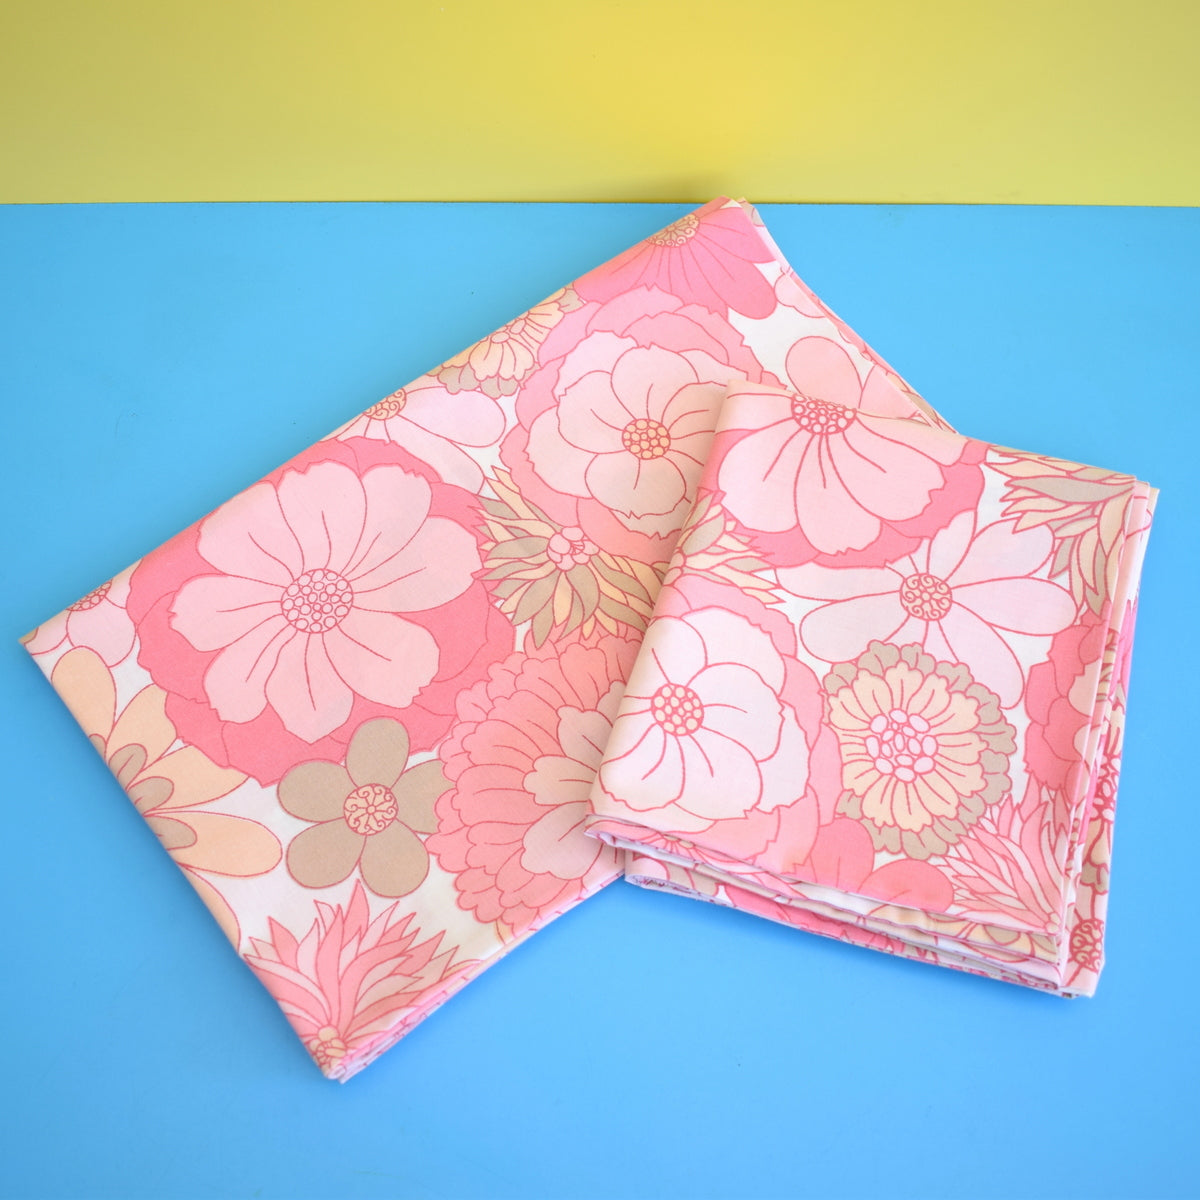 Vintage 1960s Pillow Cases (Pair) - Flower Power Cotton - Pink